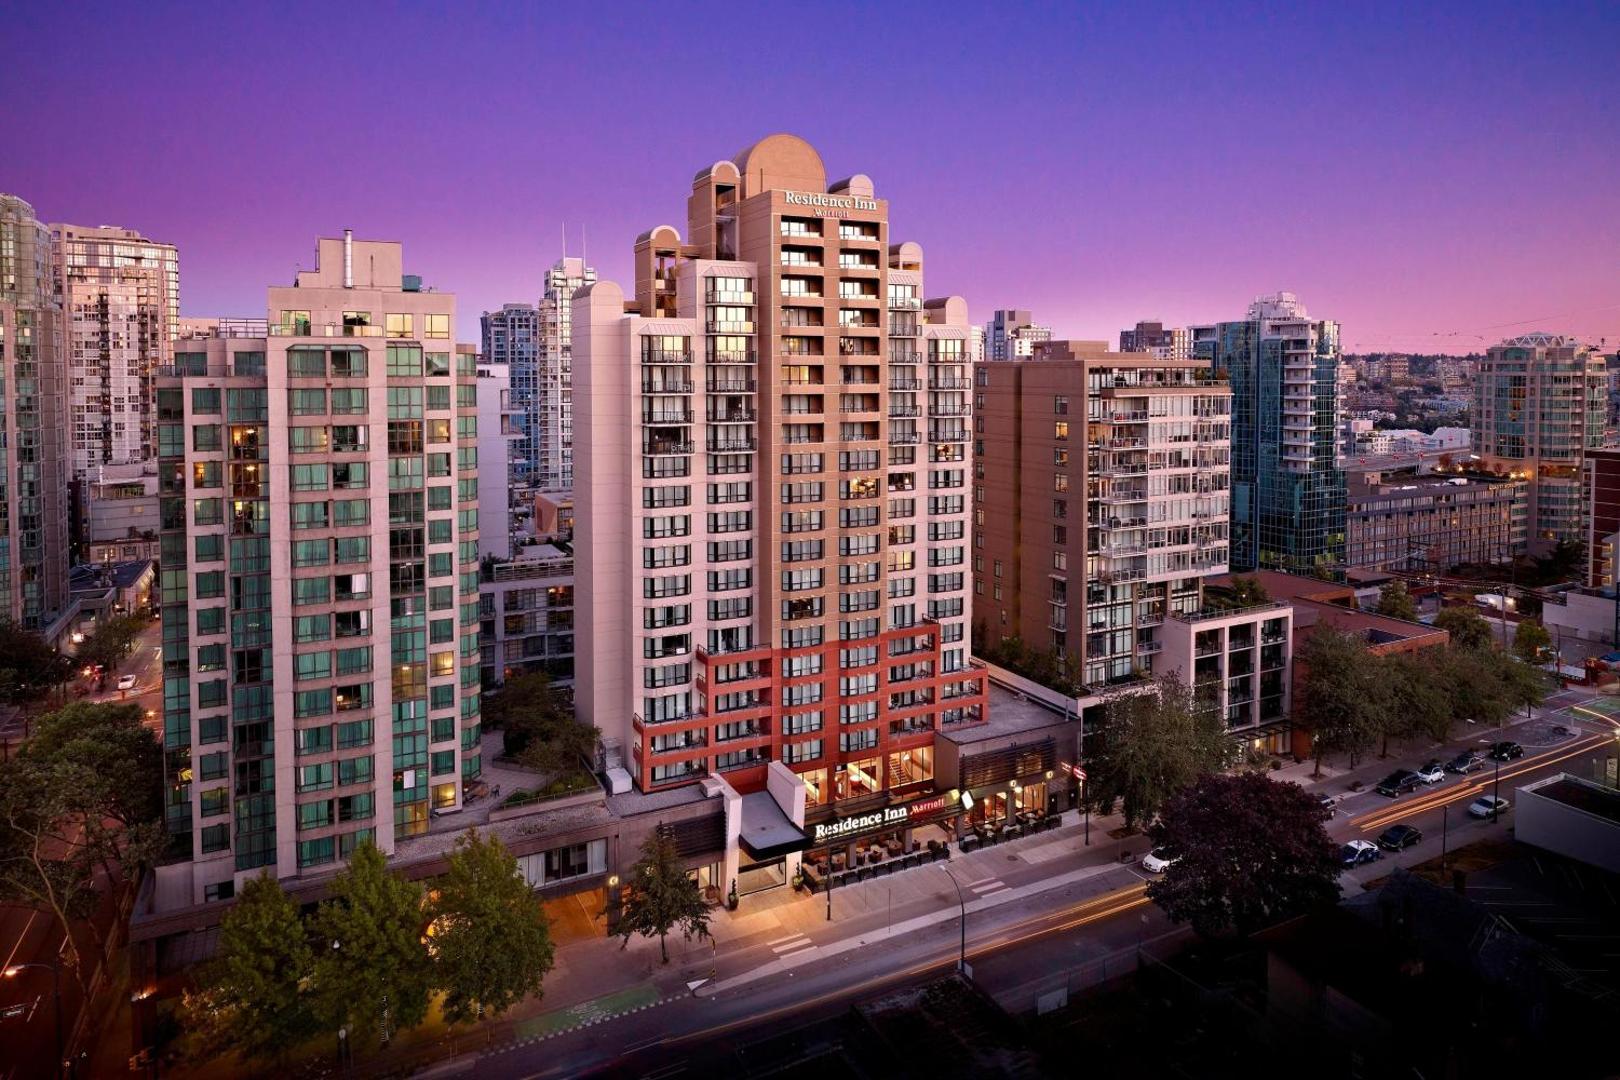 Residence Inn Vancouver Downtown